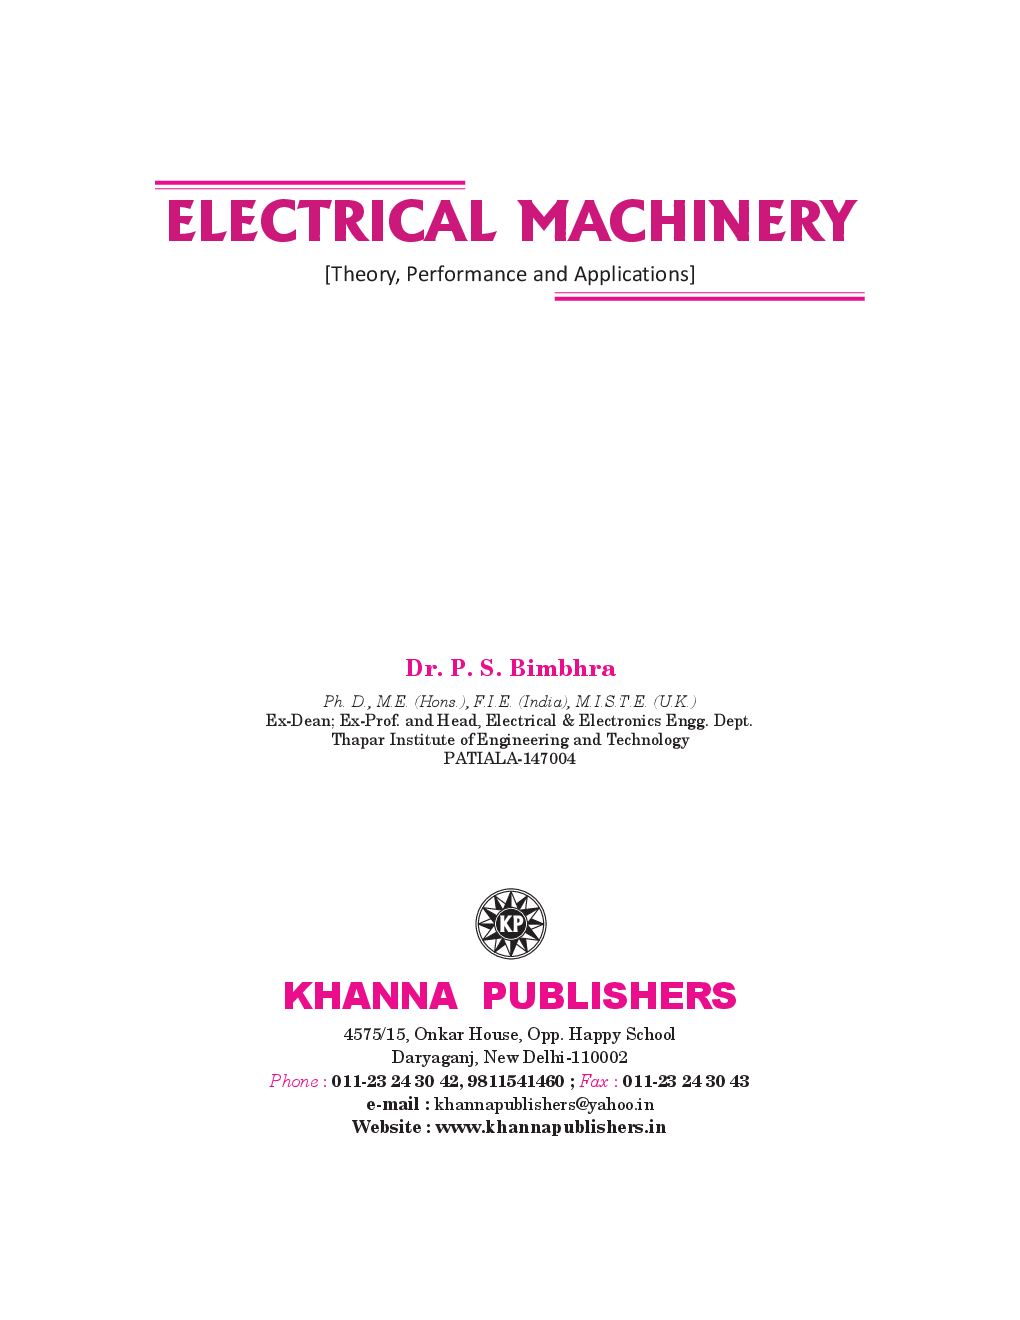 electrical machinery by dr.p.s.bimbhra pdf